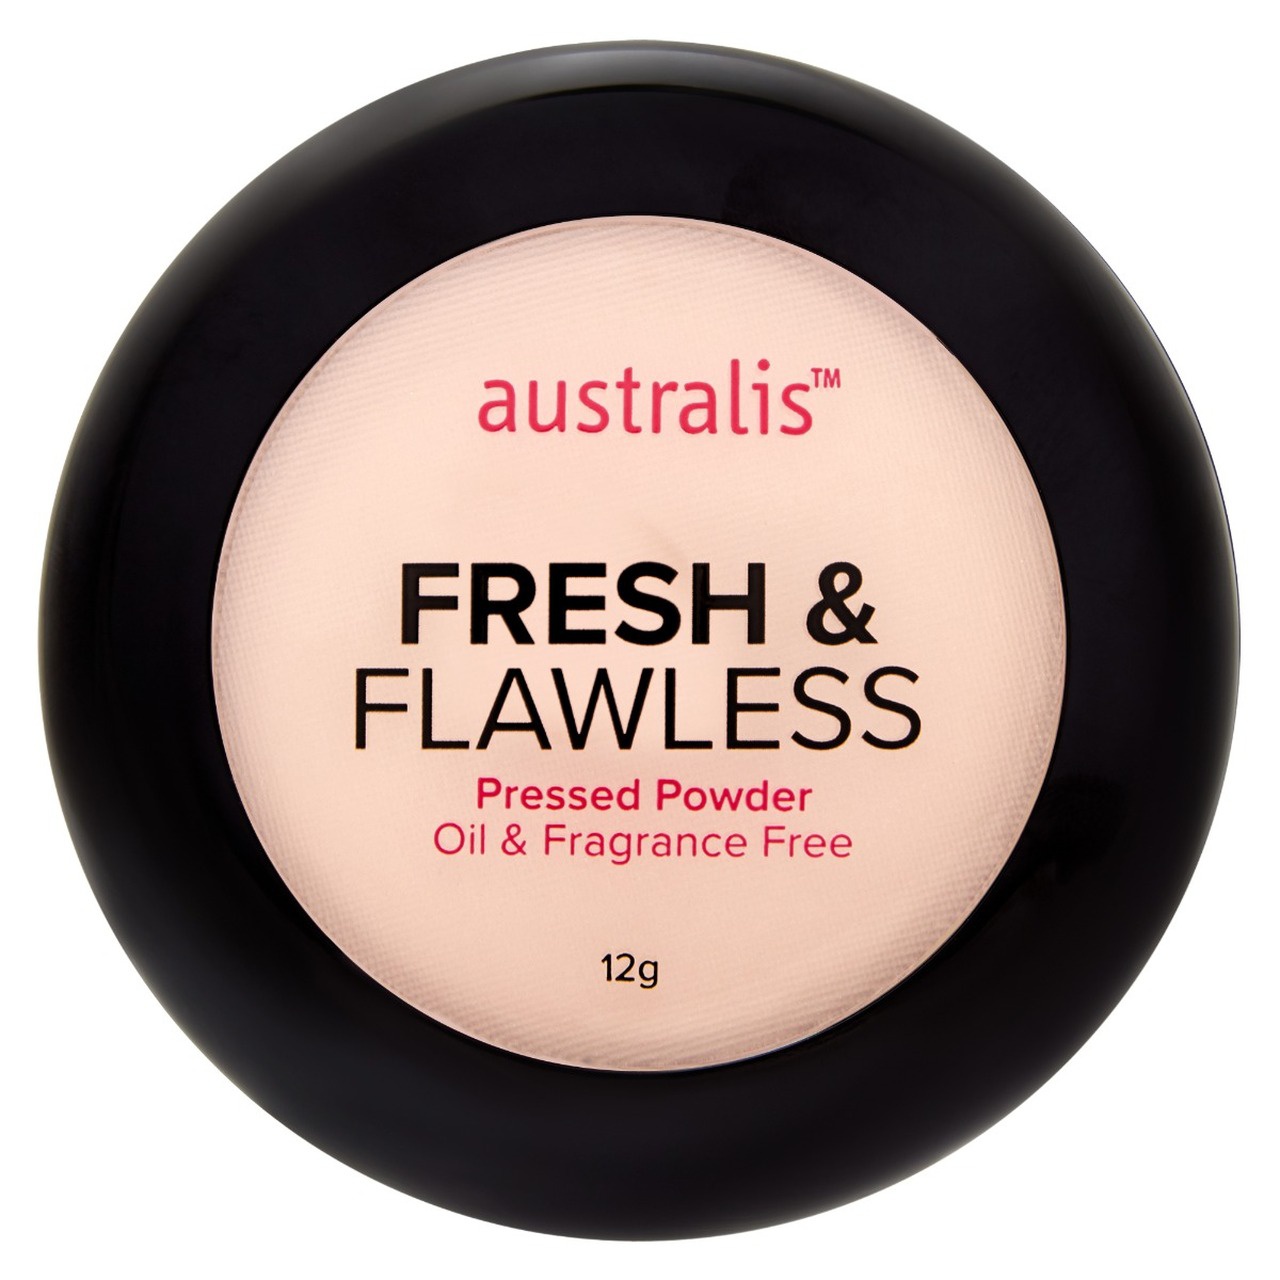 Australis Fresh & Flawless Pressed Powder